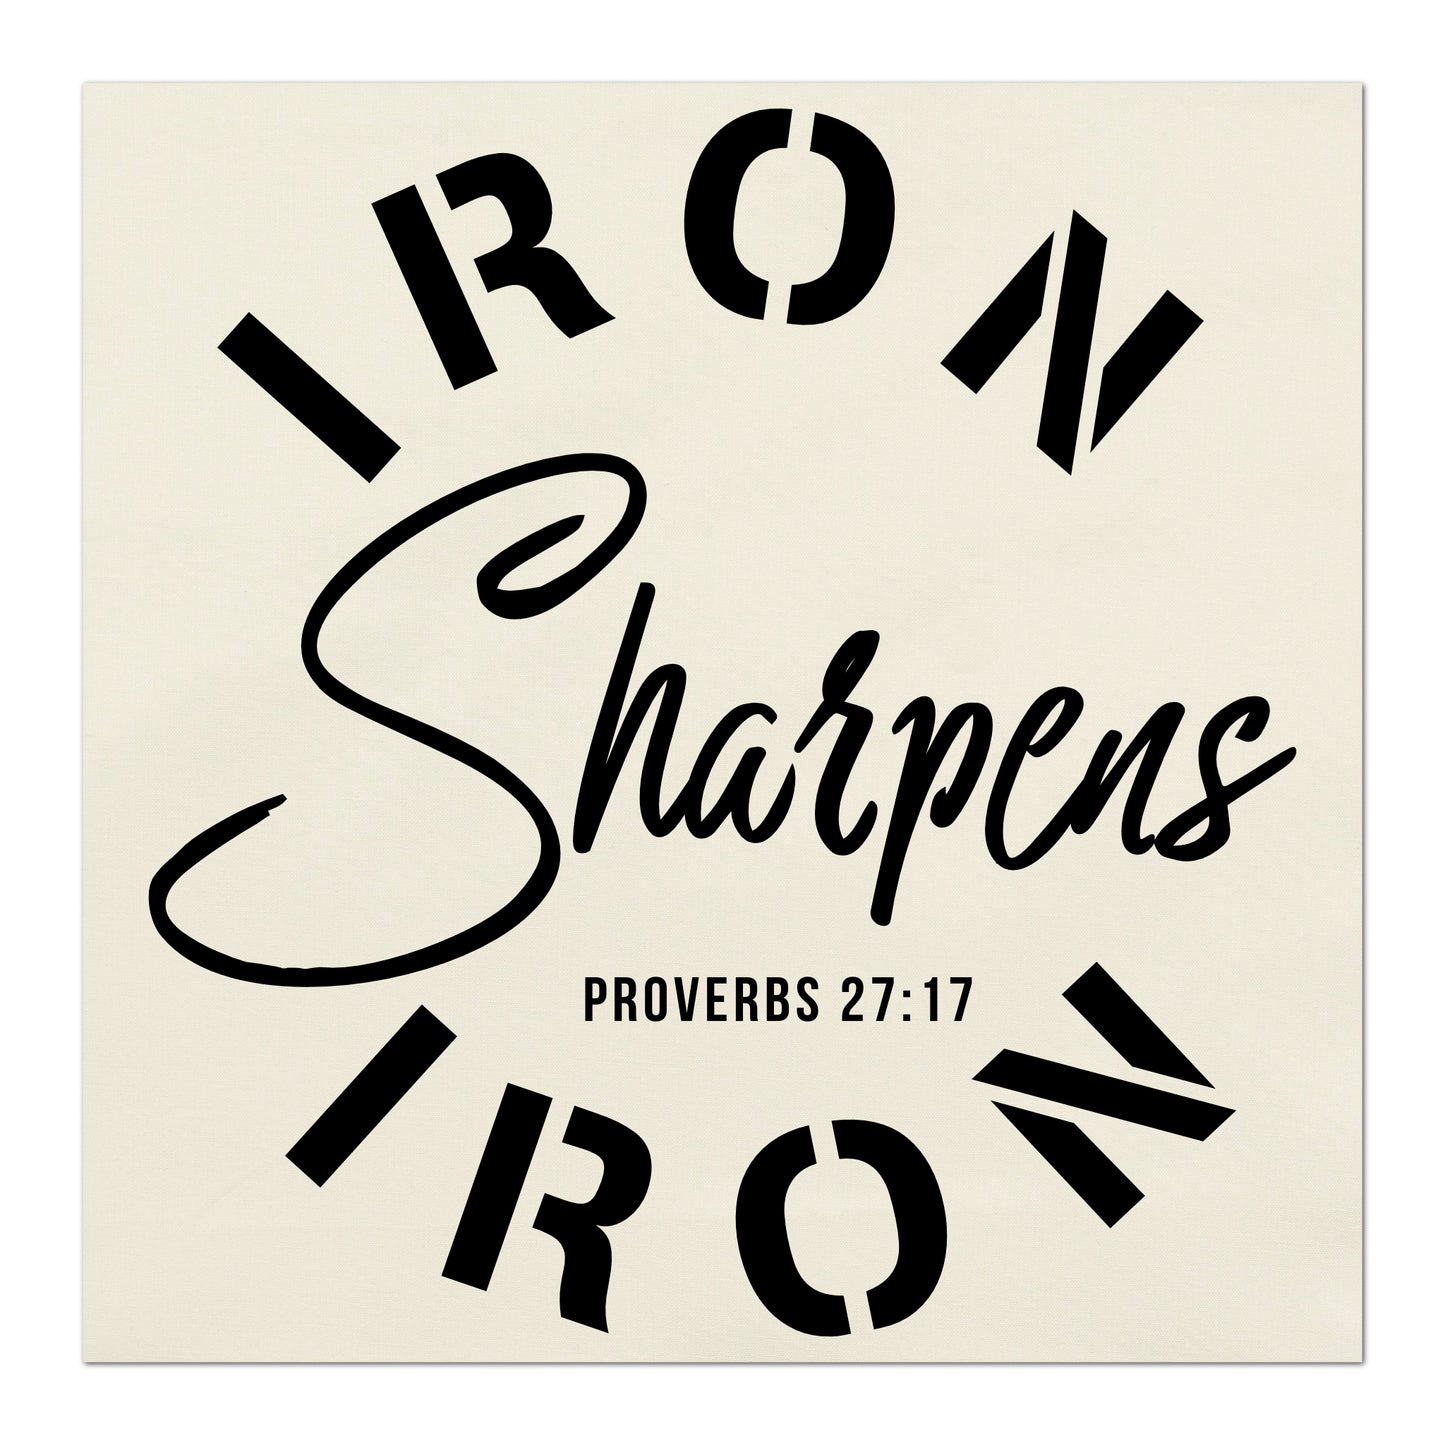 Iron Sharpens Iron - Proverbs 27:17 - Religious Fabric, Bible Verse Wall Art, Quilt Block